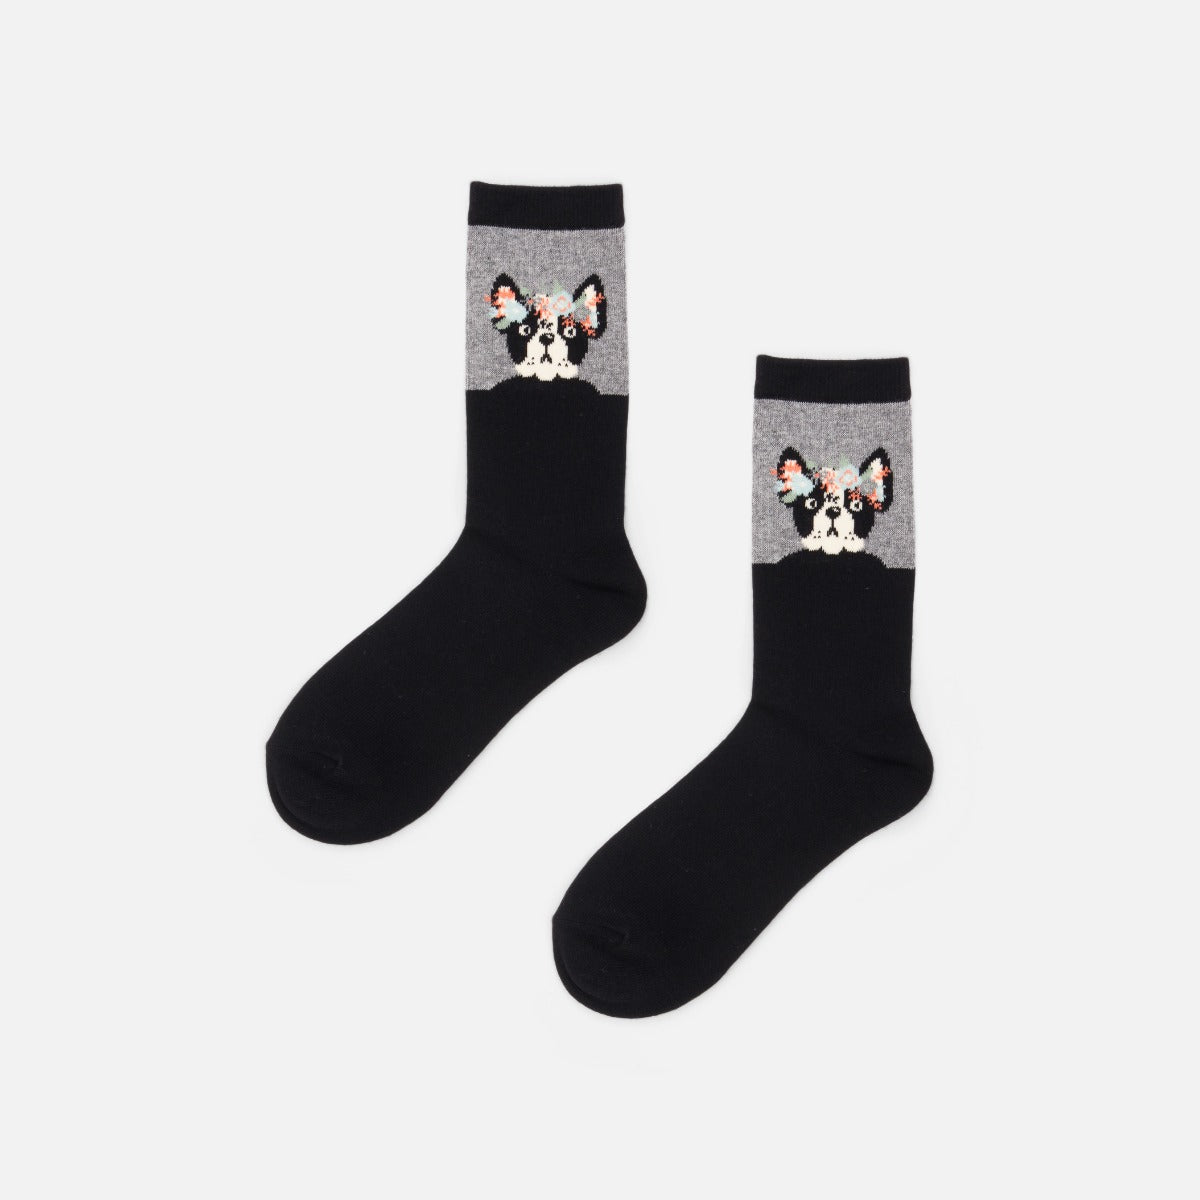 Black and grey socks with dog